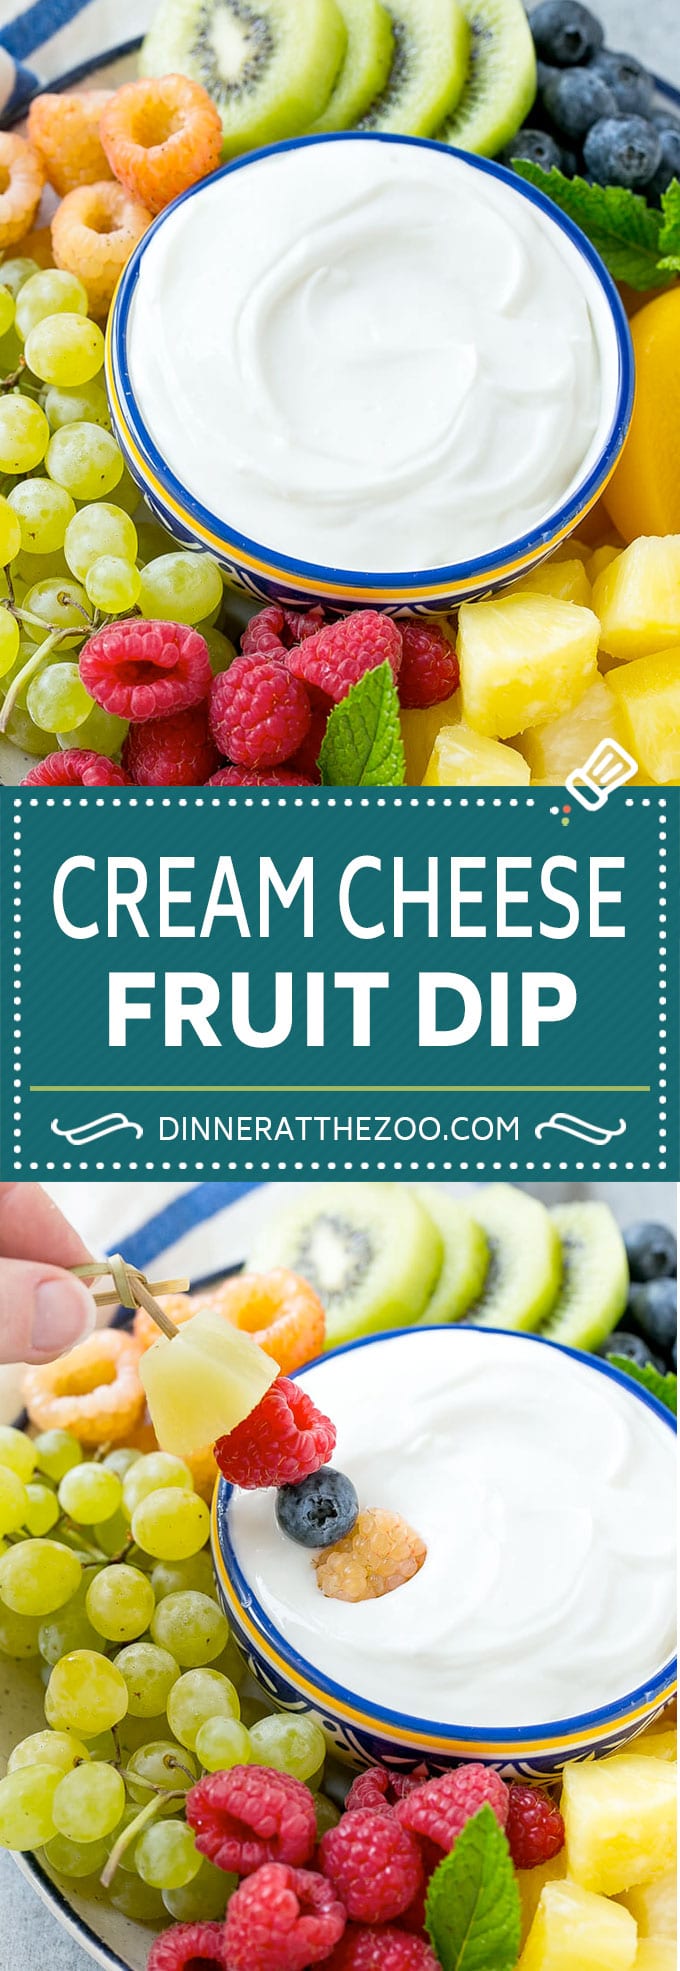 Cream Cheese Fruit Dip | Fruit Recipe | Fruit Dip #fruit #dip #creamcheese #snack #dessert #dinneratthezoo